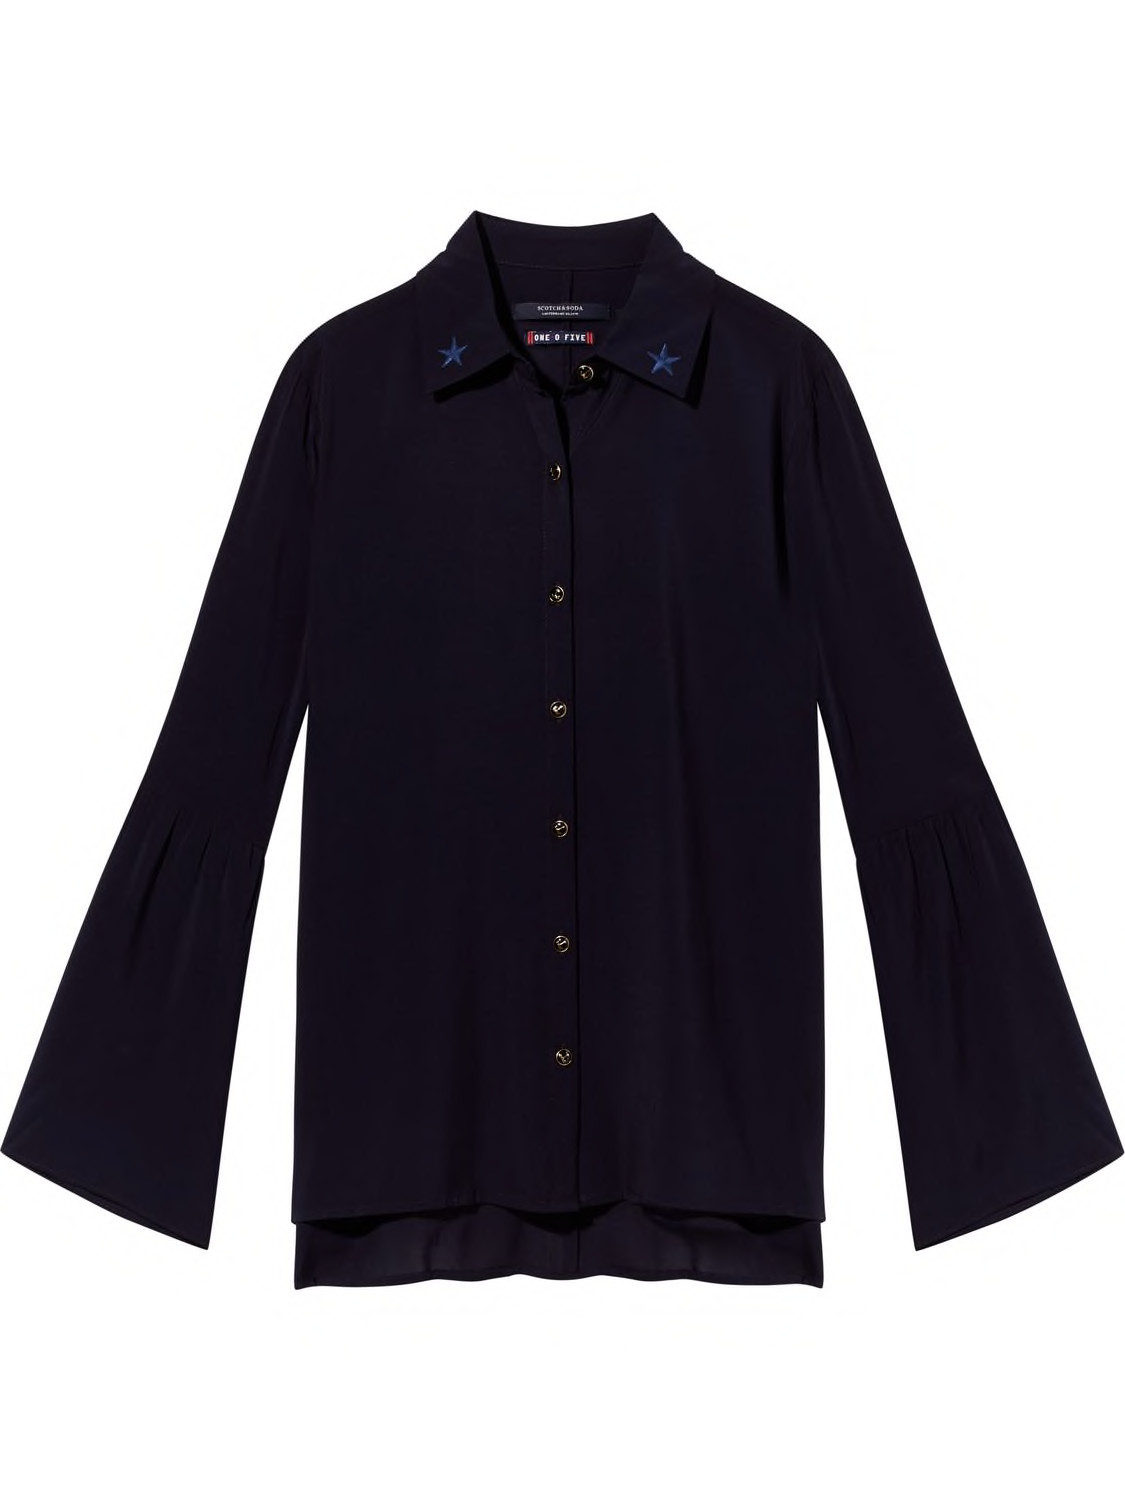 Donkerblauwe dames blouse met volant mouw Maison Scotch - 141409